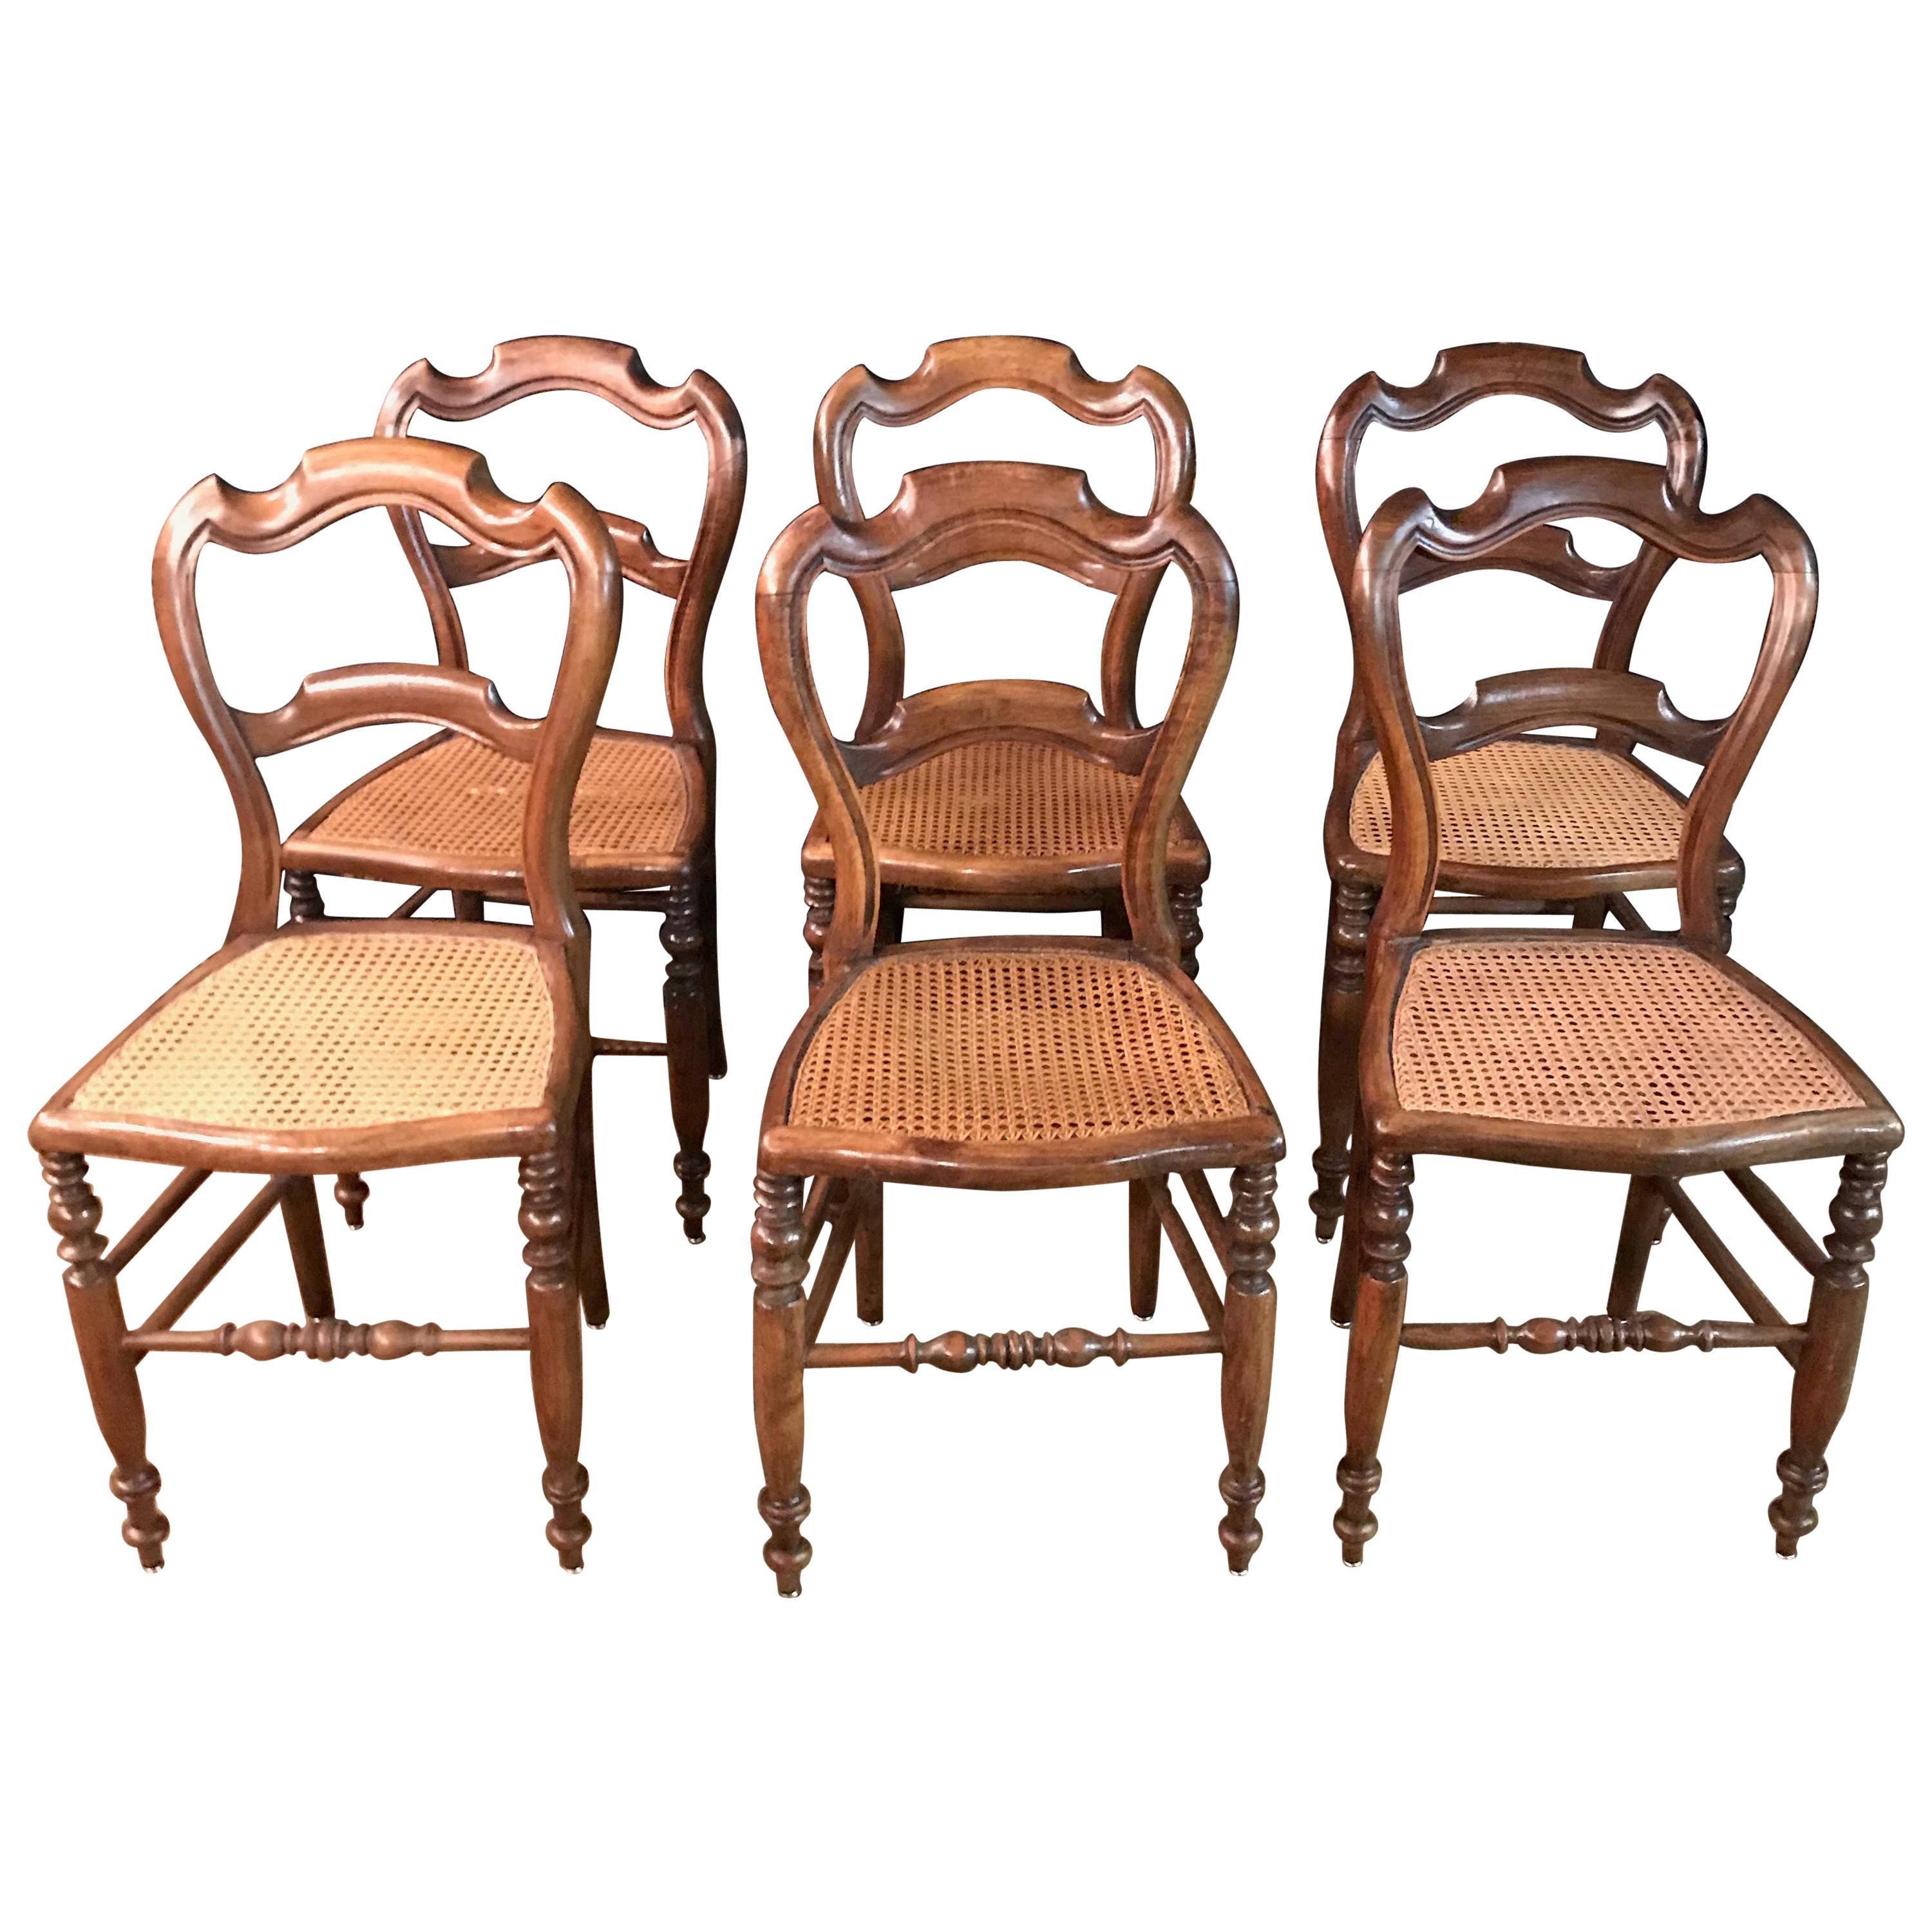 6 Original Biedermeier Chairs Caféhaus Seat Weave circa 1850-1860 Solid Mahogany For Sale